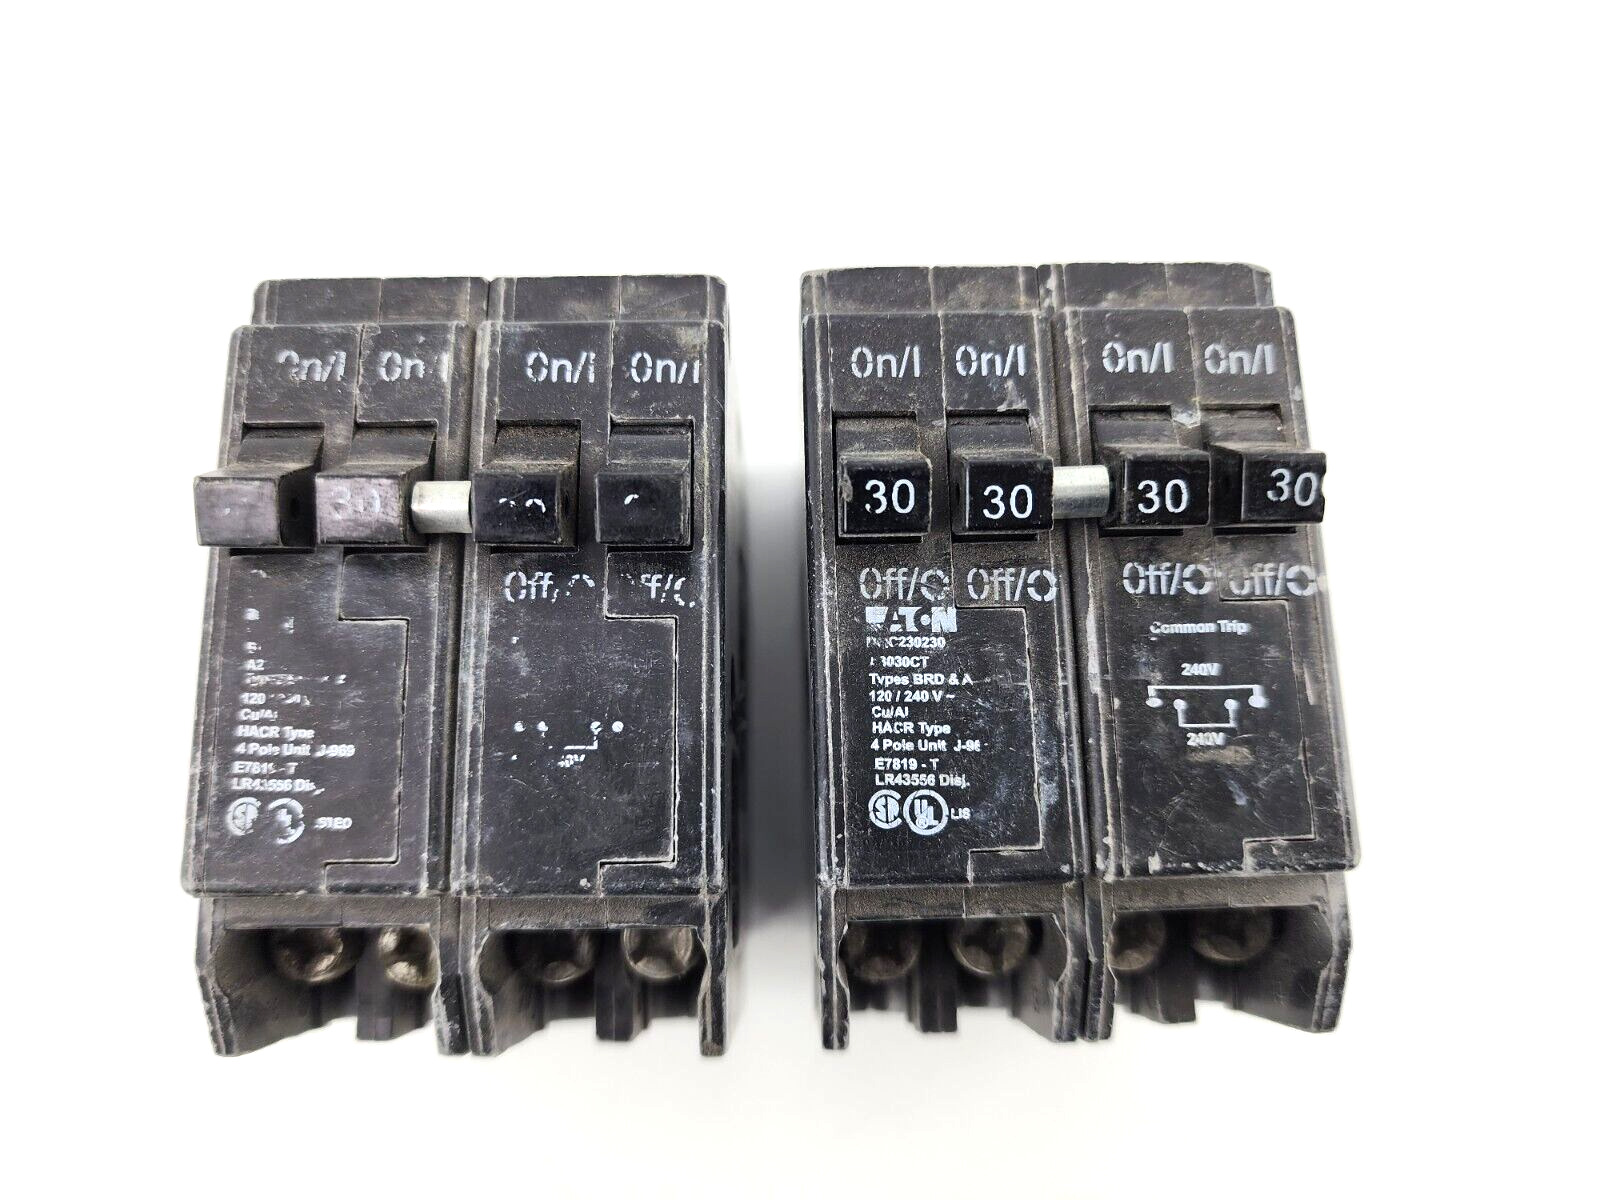 2pcs Used Eaton 30A 4 Pole Circuit Breaker Types BRD & A 120/240V